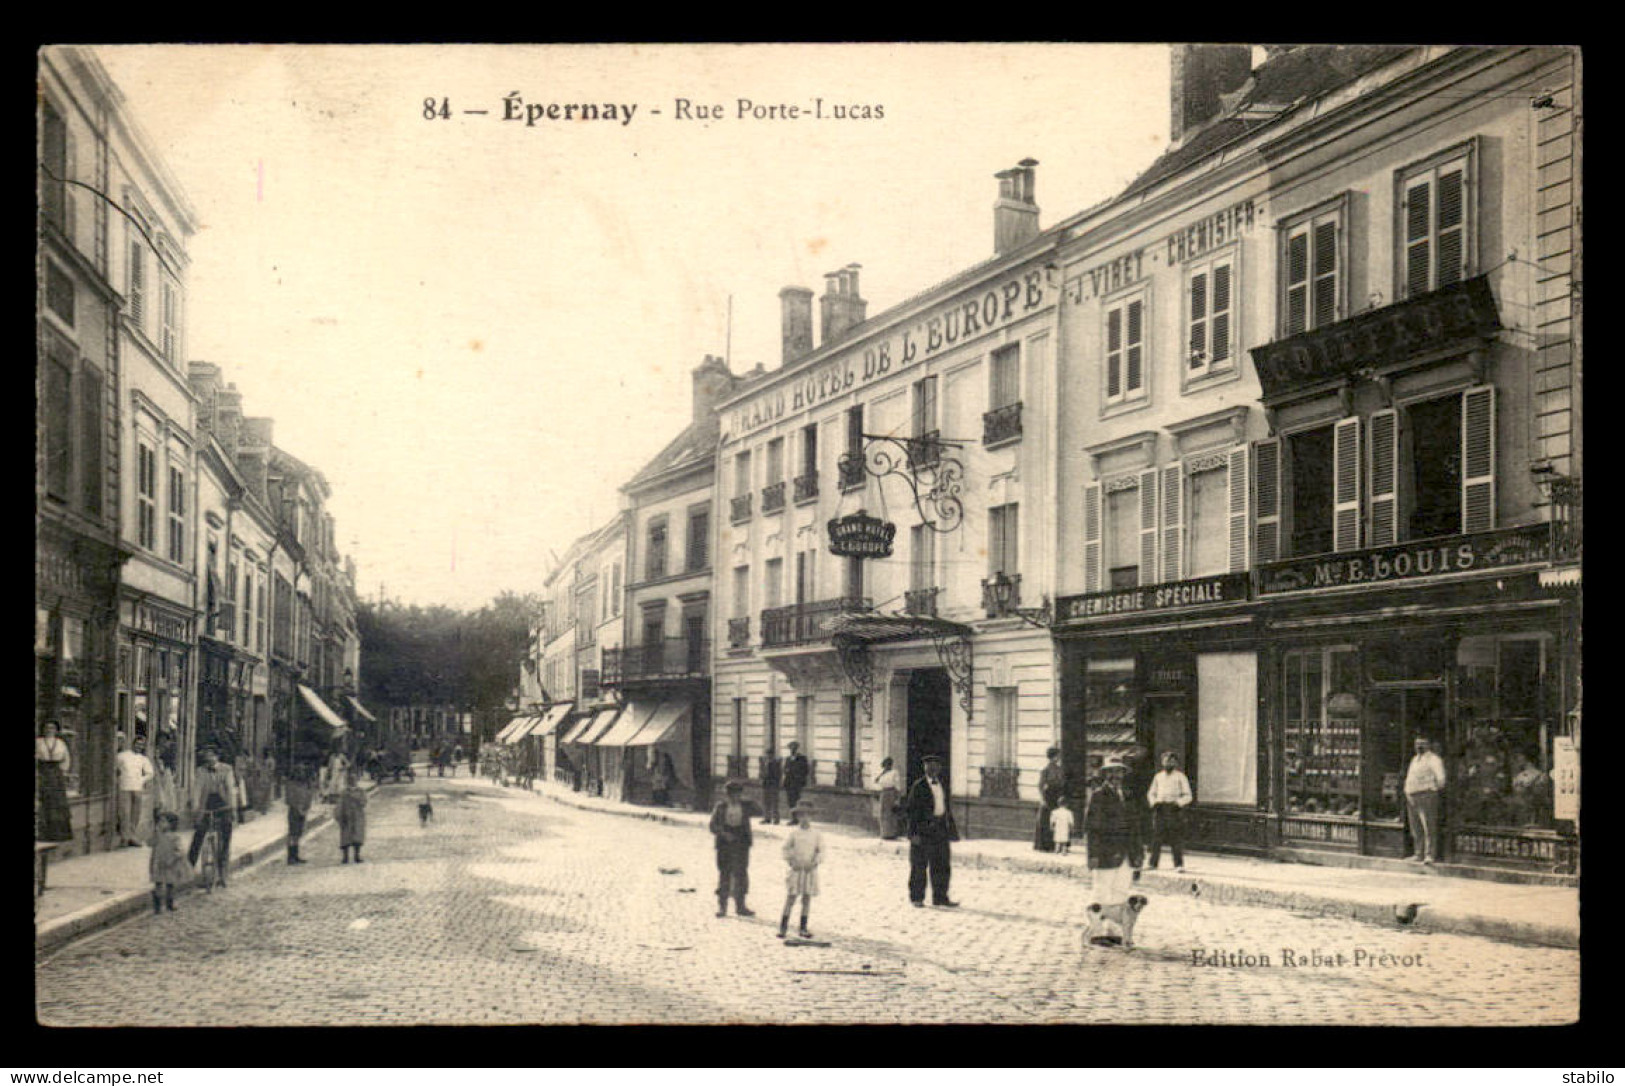 51 - EPERNAY - RUE PORTE-LUCAS - COIFFEUR E. LOUIS - CHEMISERIE J. VIRET - GRAND HOTEL DE L'EUROPE - Epernay